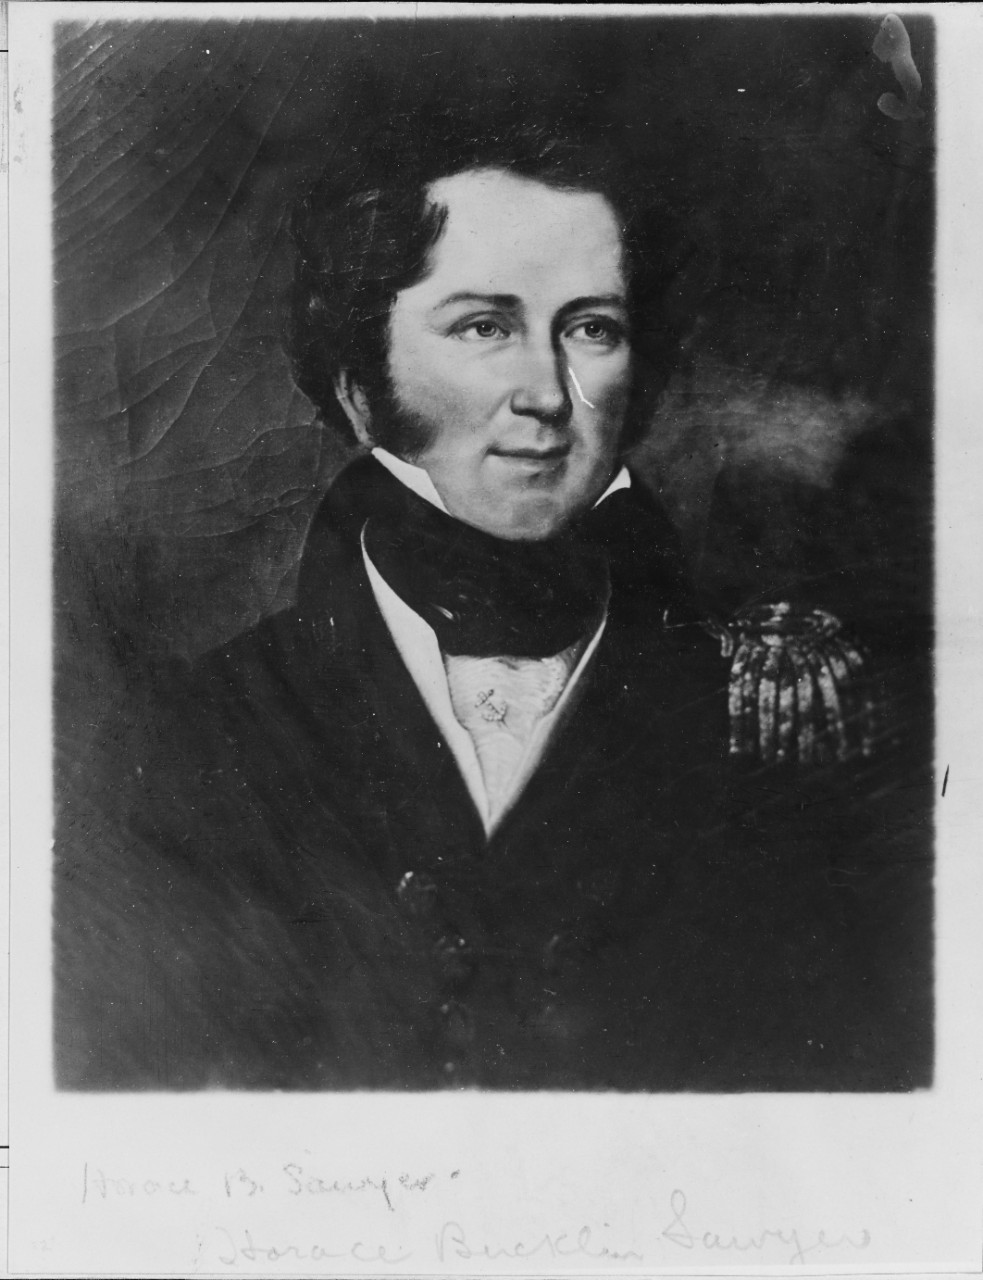 Horace Bucklin Sawyer, Captain, USN